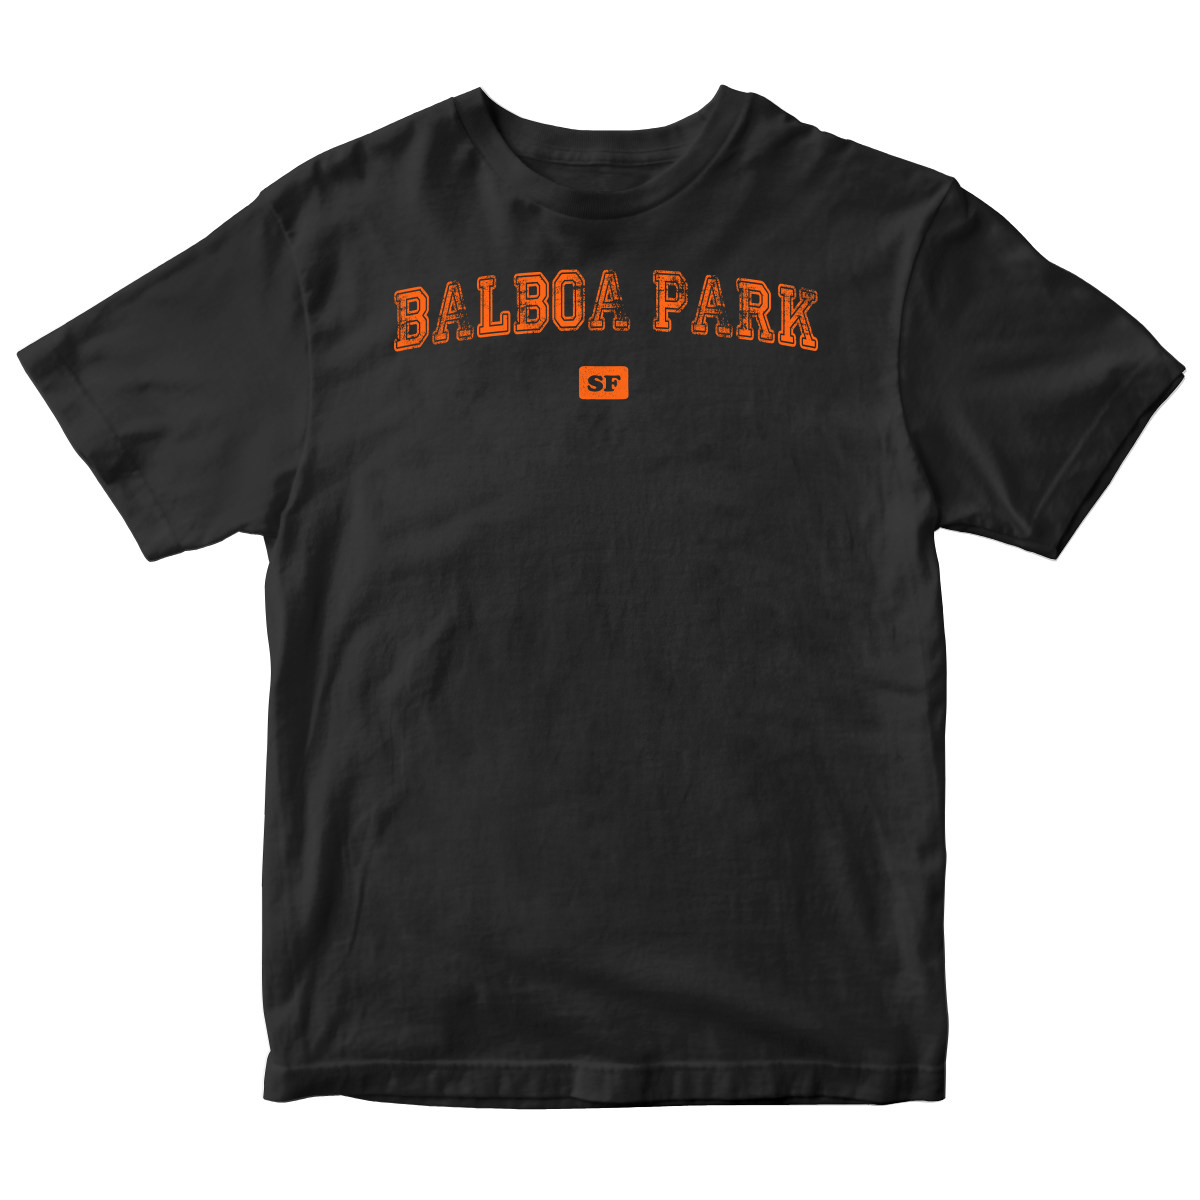 Balboa Park Sf Represent Toddler T-shirt | Black